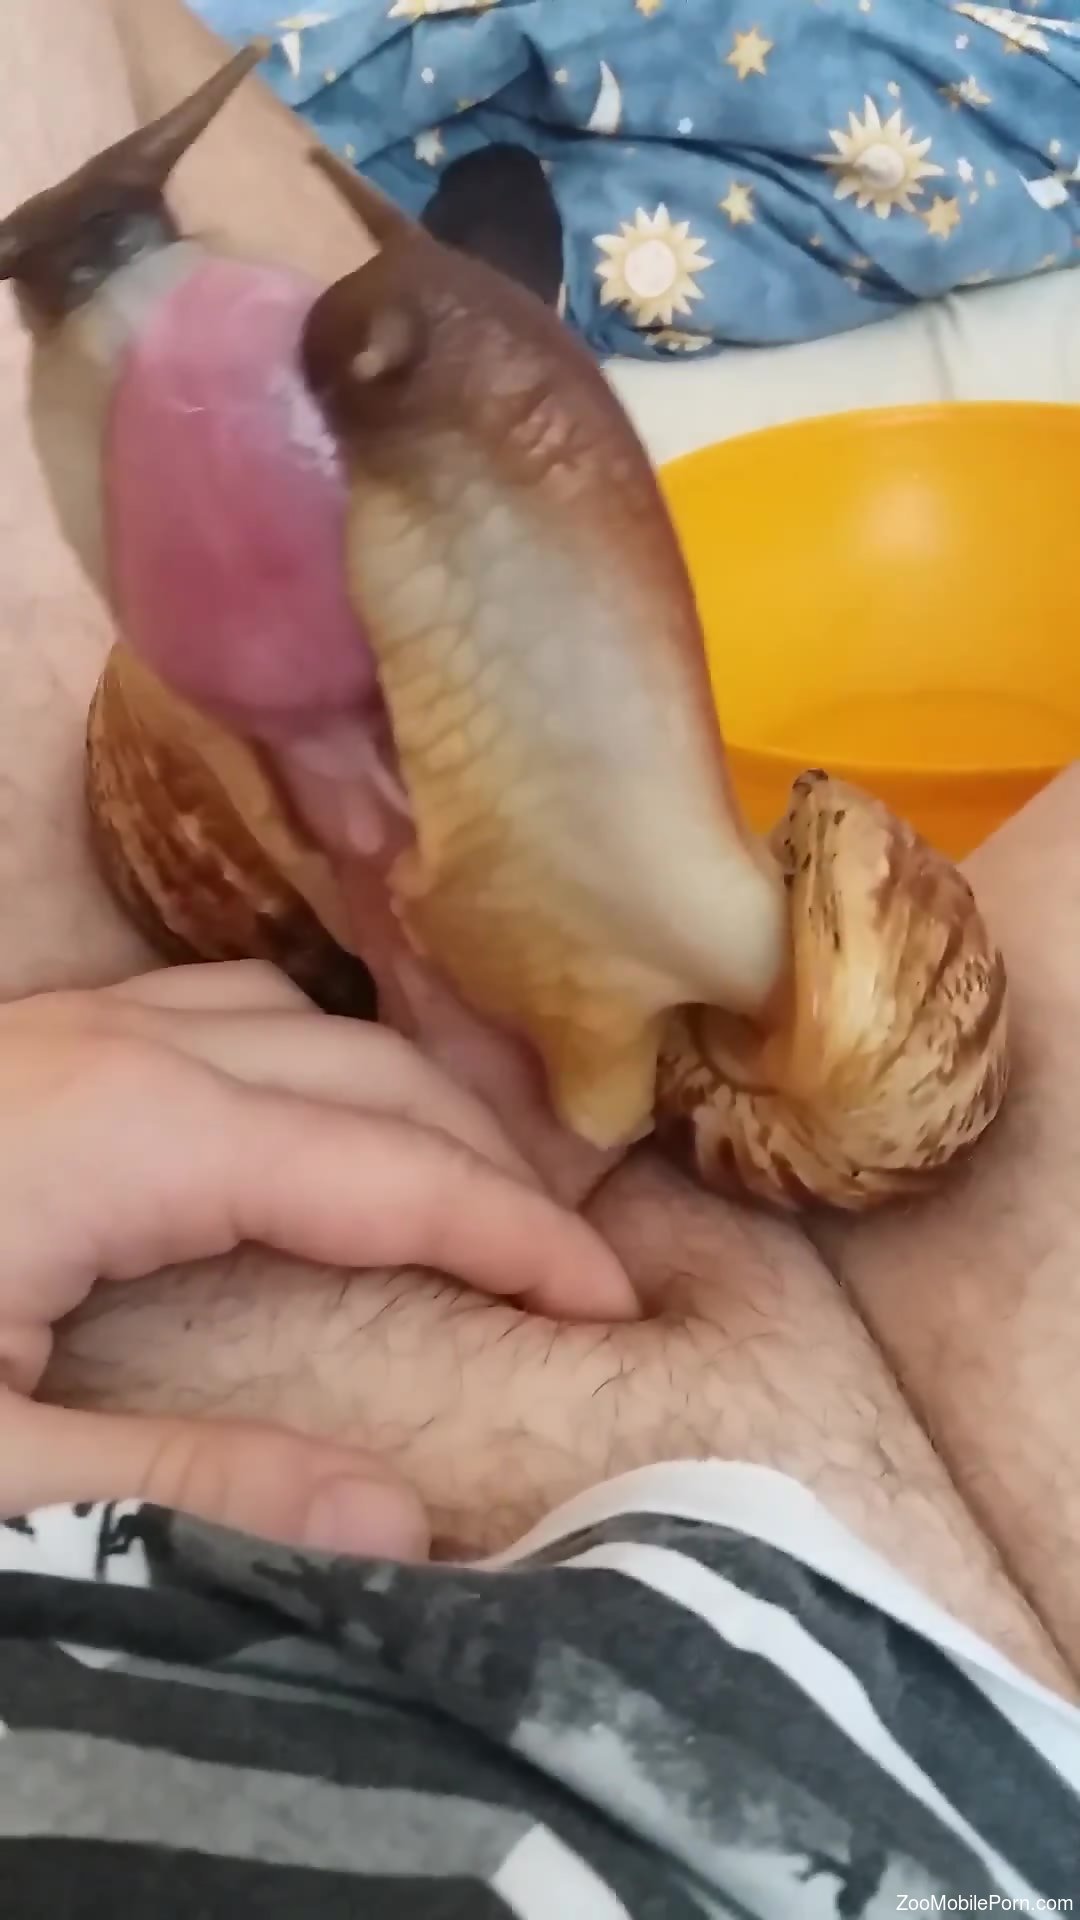 Snail Porn - Man applies snails on his dick during masturbation